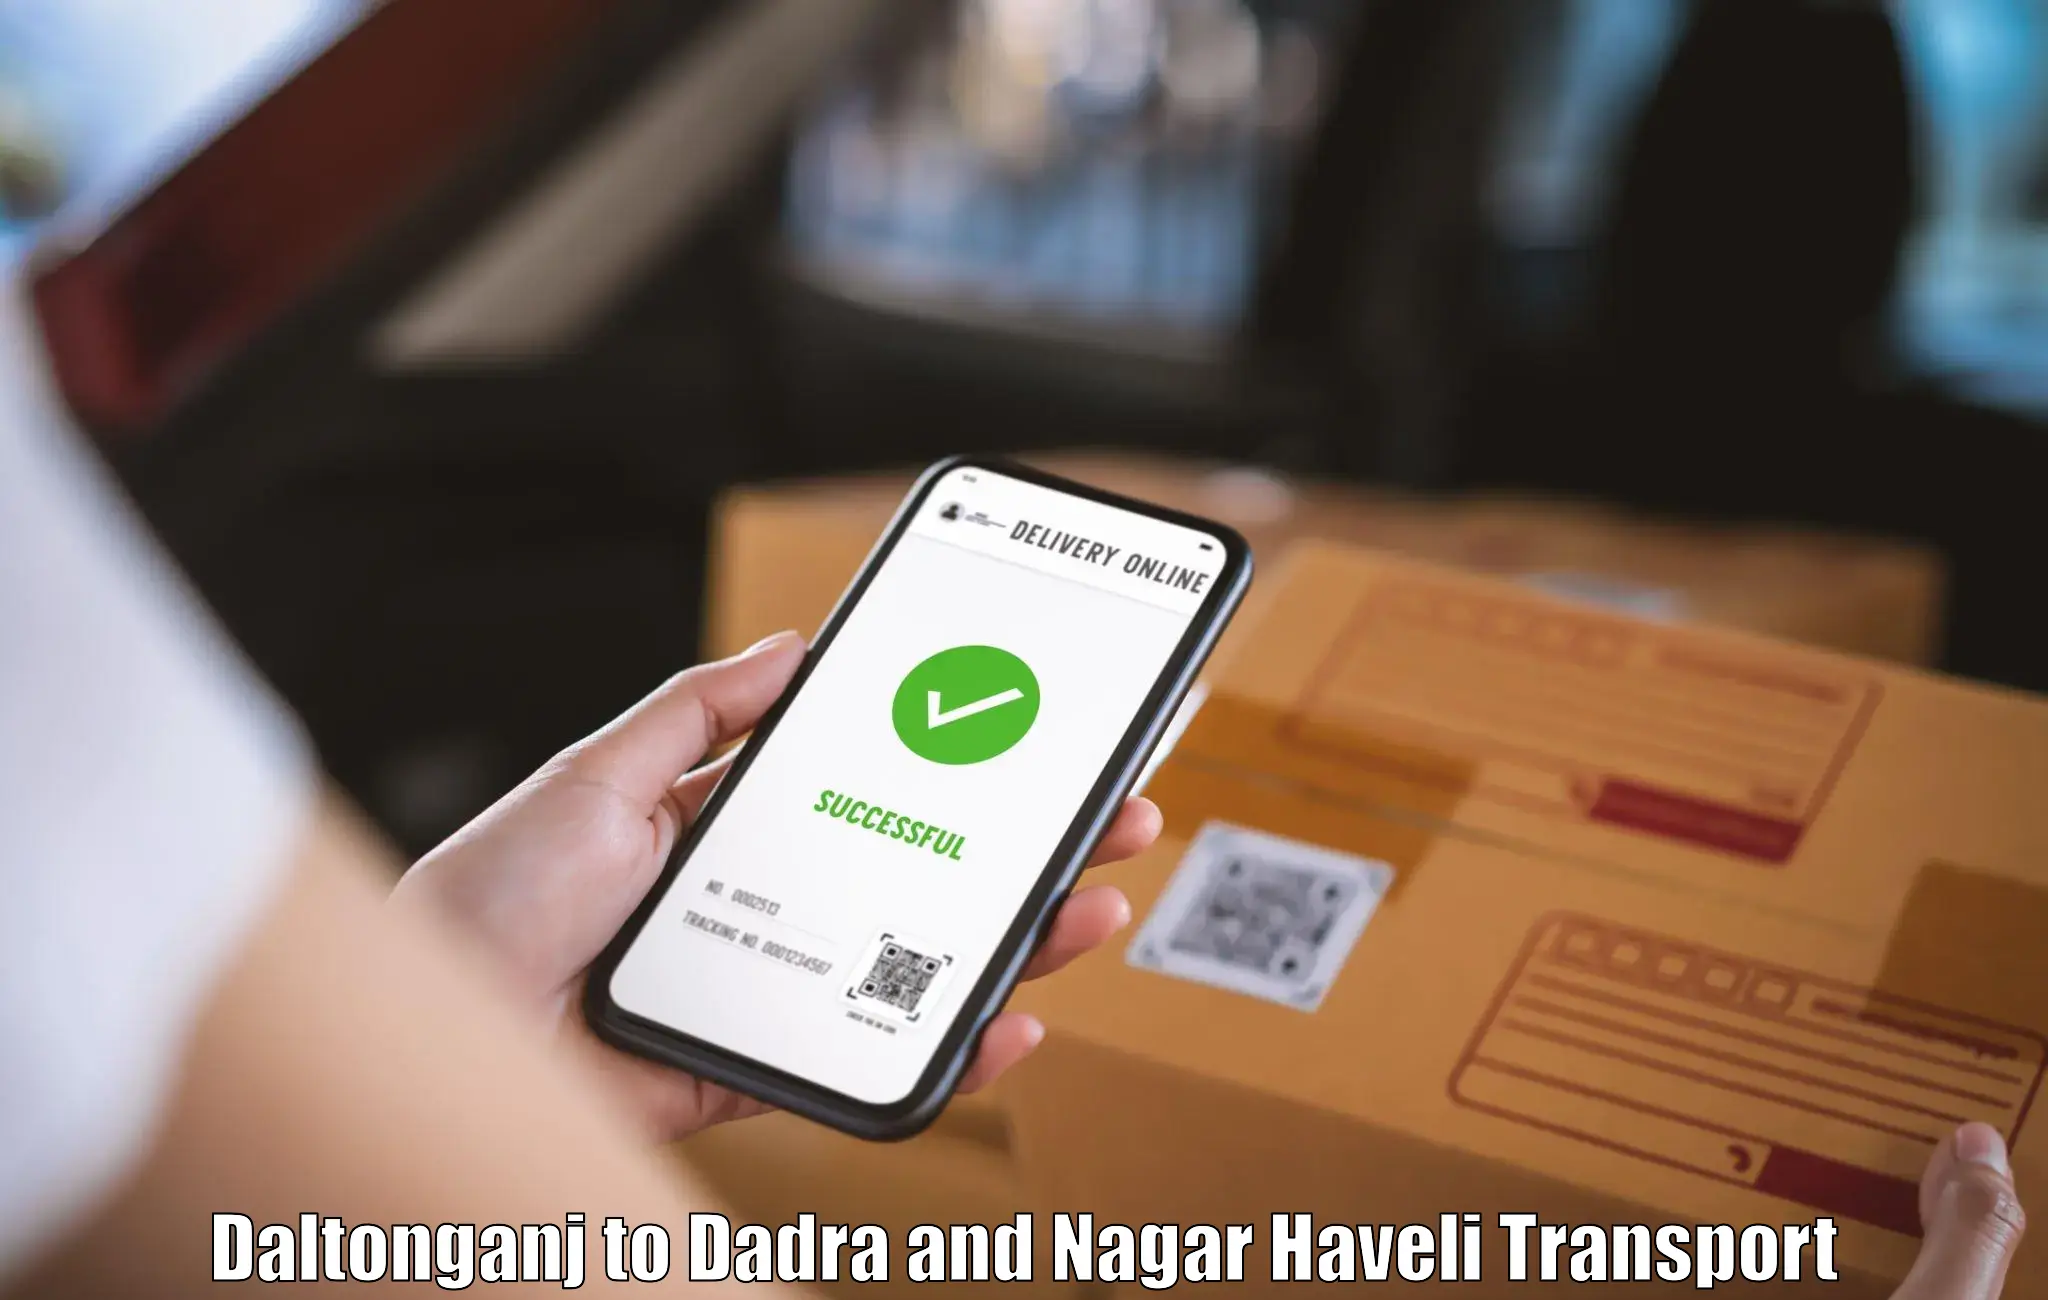 Transport shared services Daltonganj to Dadra and Nagar Haveli